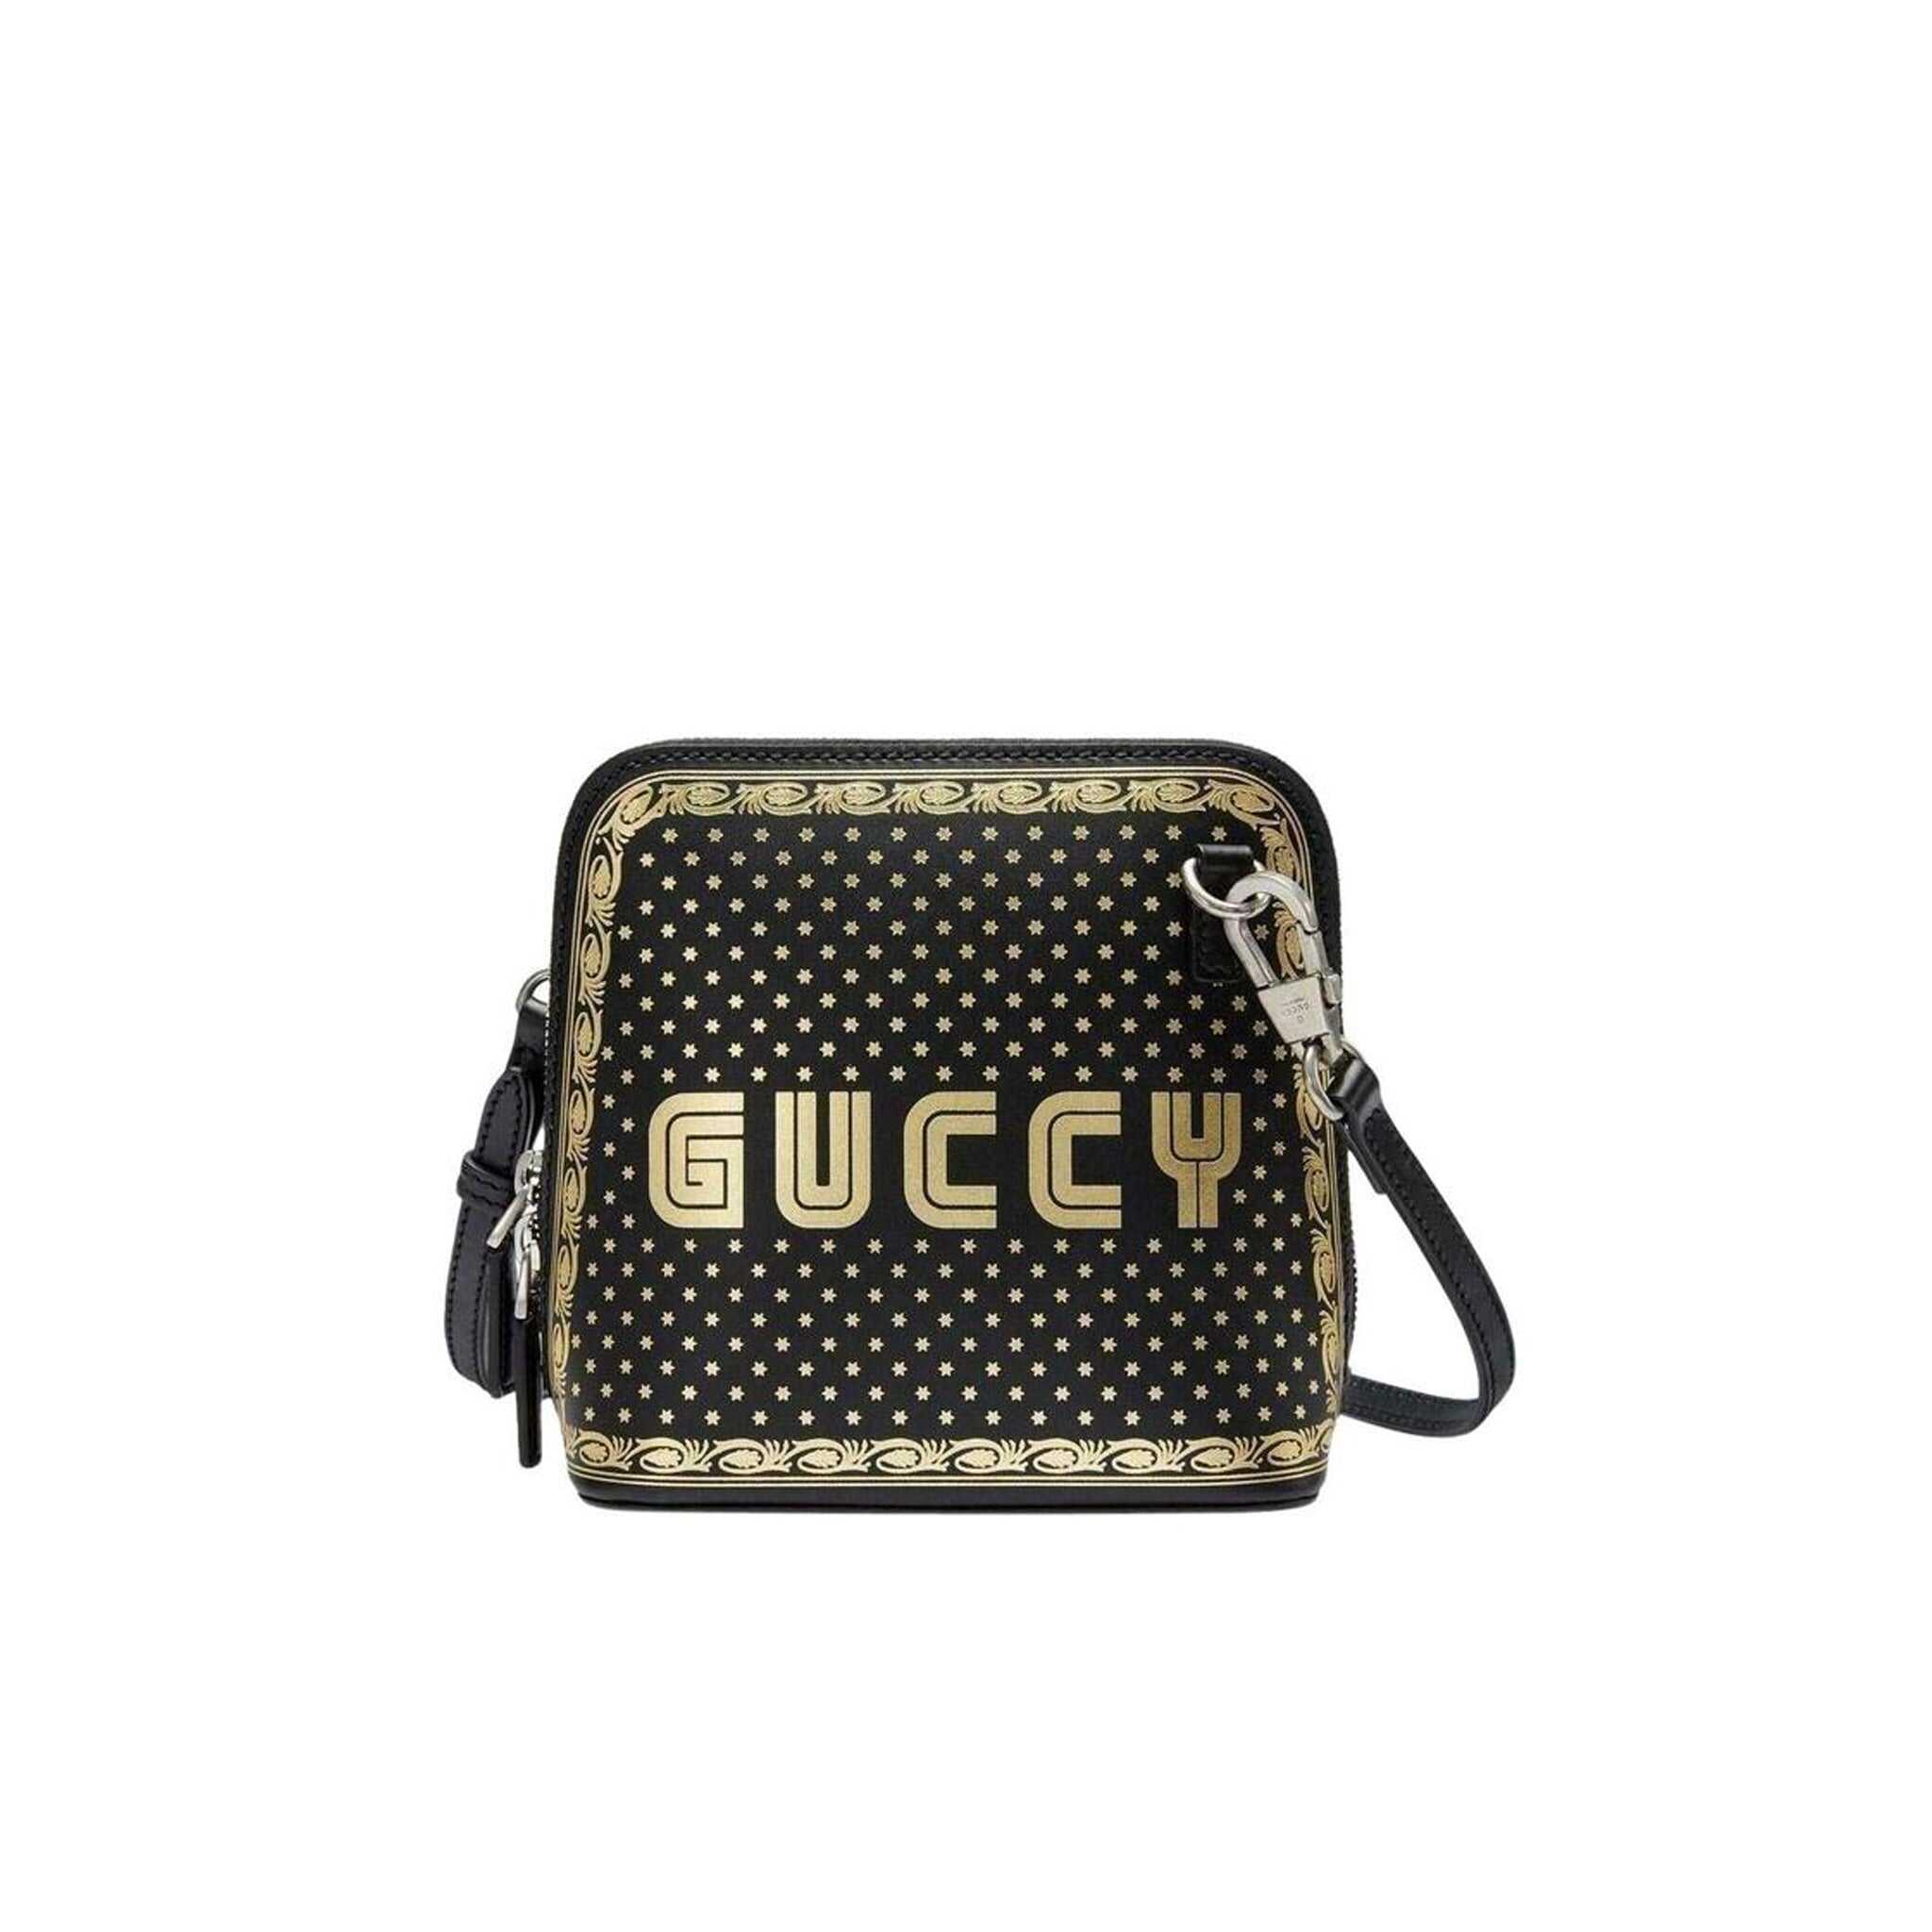 Gucci Gucci Logo Moon & Stars Leather Bag Black